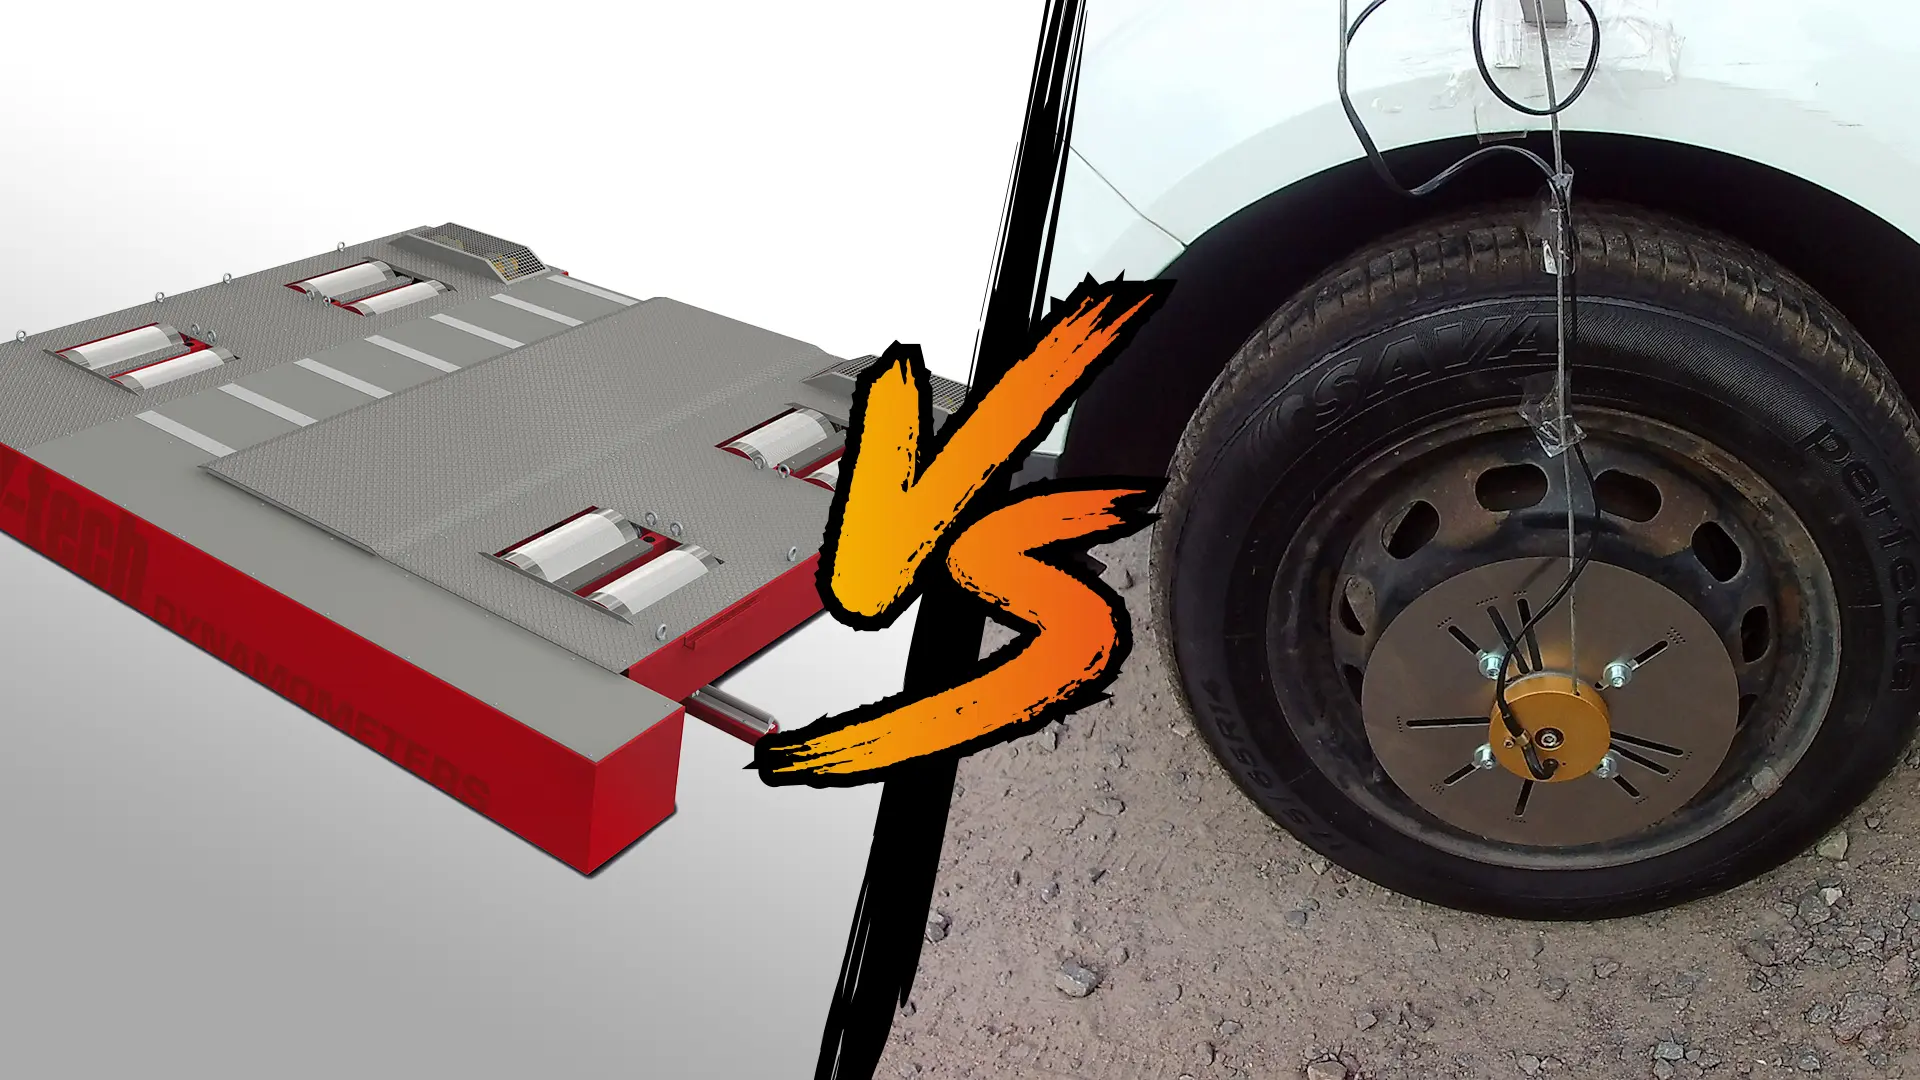 Chassis dynamometer vs 'portable road dyno'